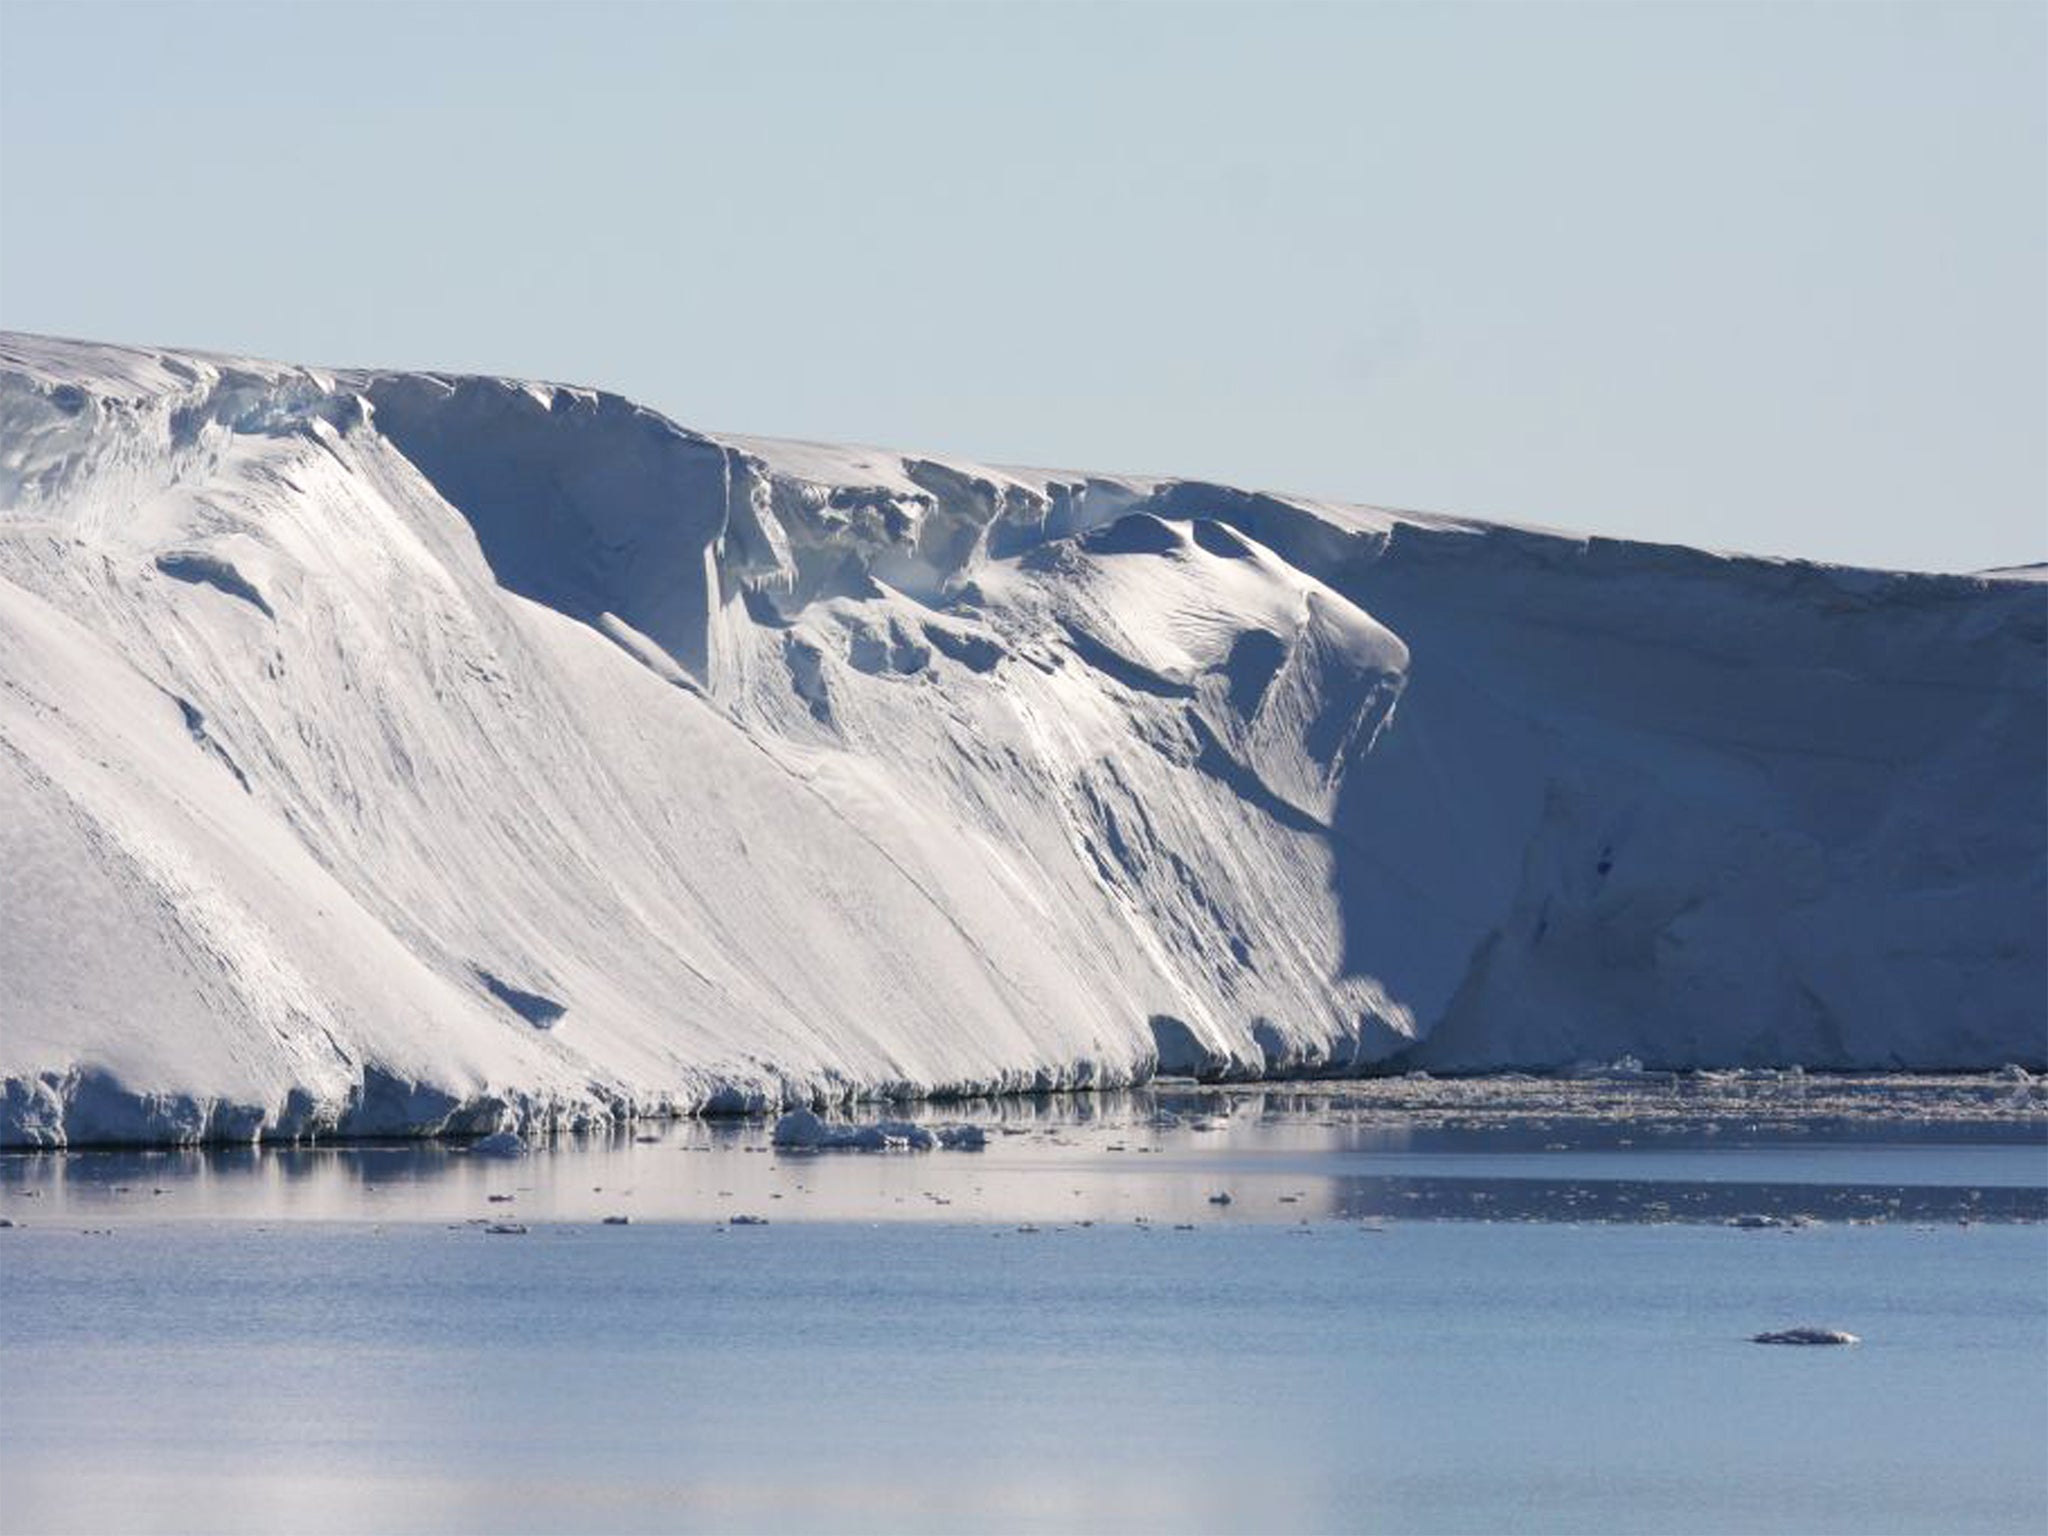 The Totten Glacier in eastern Antarctica